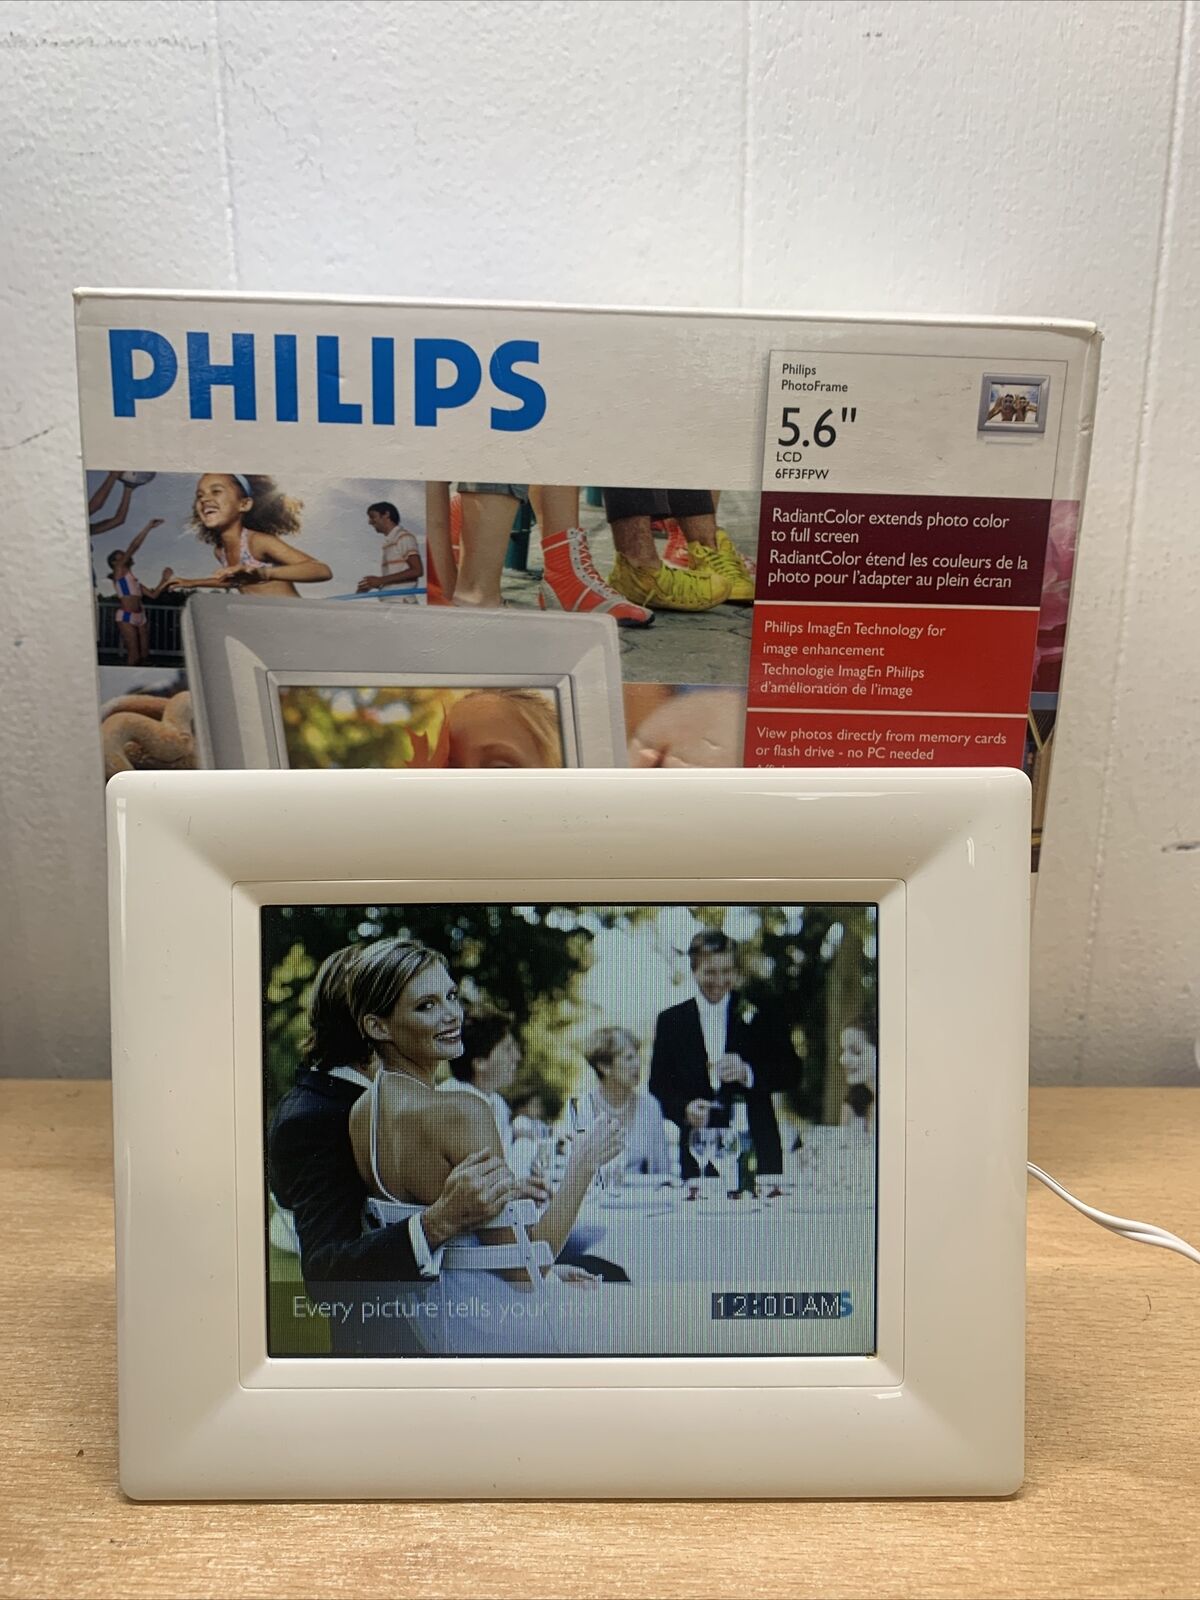 Philips Digital Photo Frame 5.6 inch